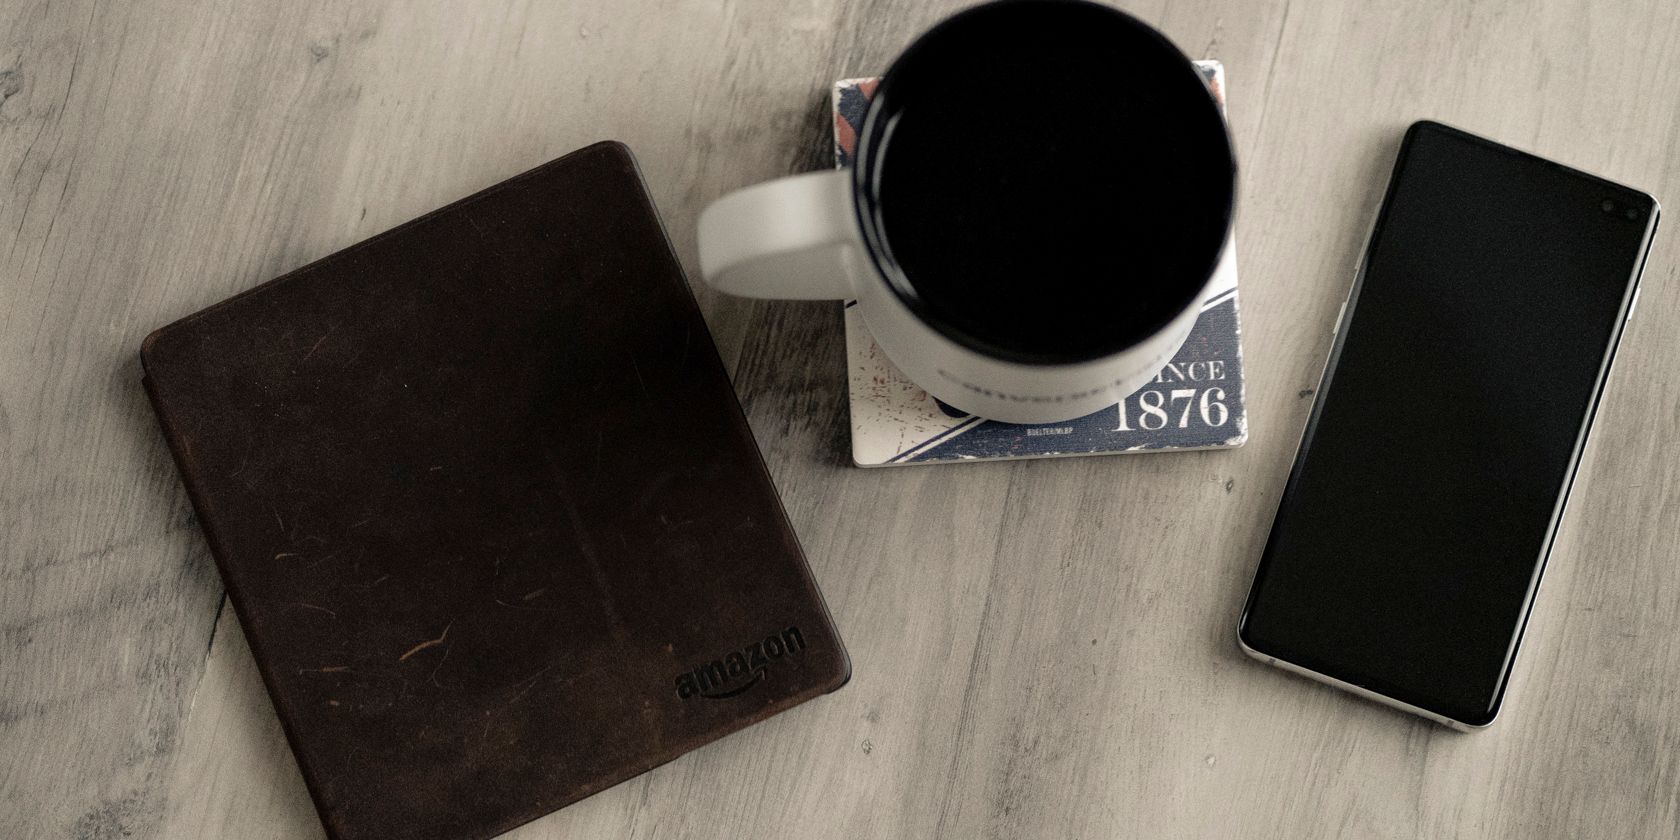 Photo of a Kindle oasis on a desk with a smartphone and a mug